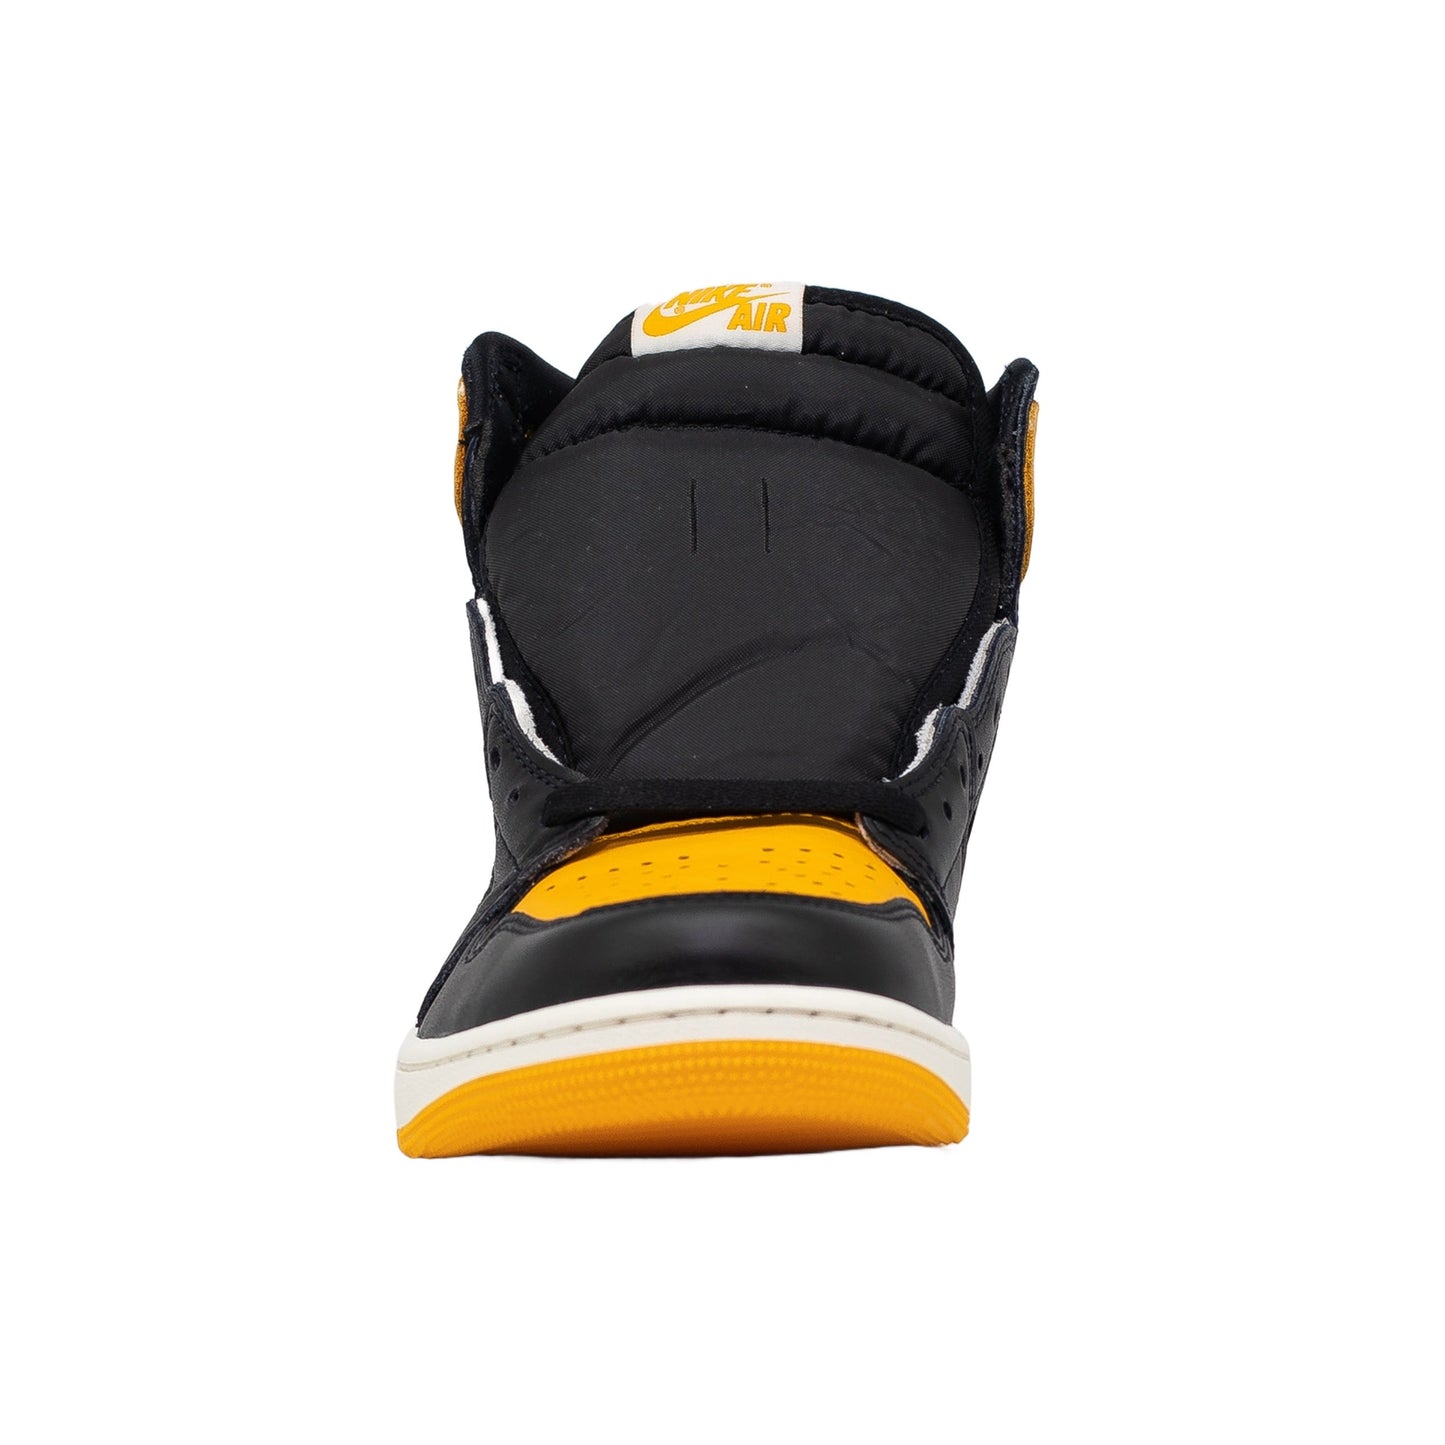 Nike Air Jordan 1 Retro High Sports illustriert 555088-500 weiß schwarz 3 4 6 11